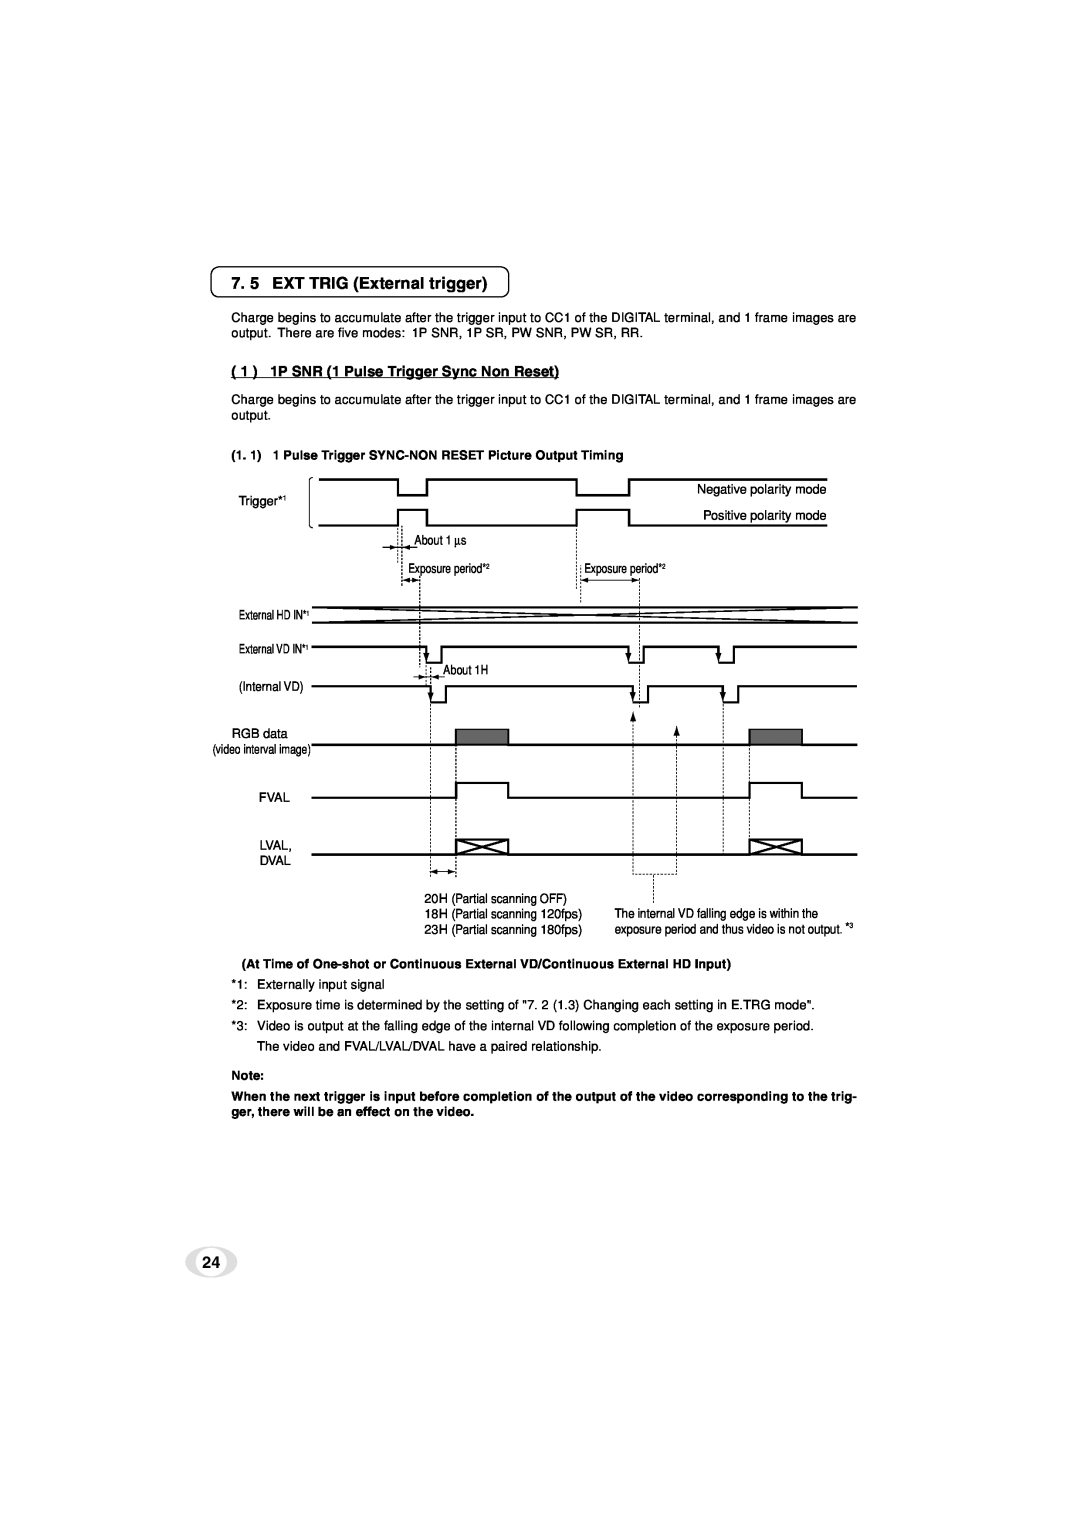 Toshiba IK-TF5C instruction manual 7. 5 EXT TRIG External trigger, 1 1P SNR 1 Pulse Trigger Sync Non Reset 